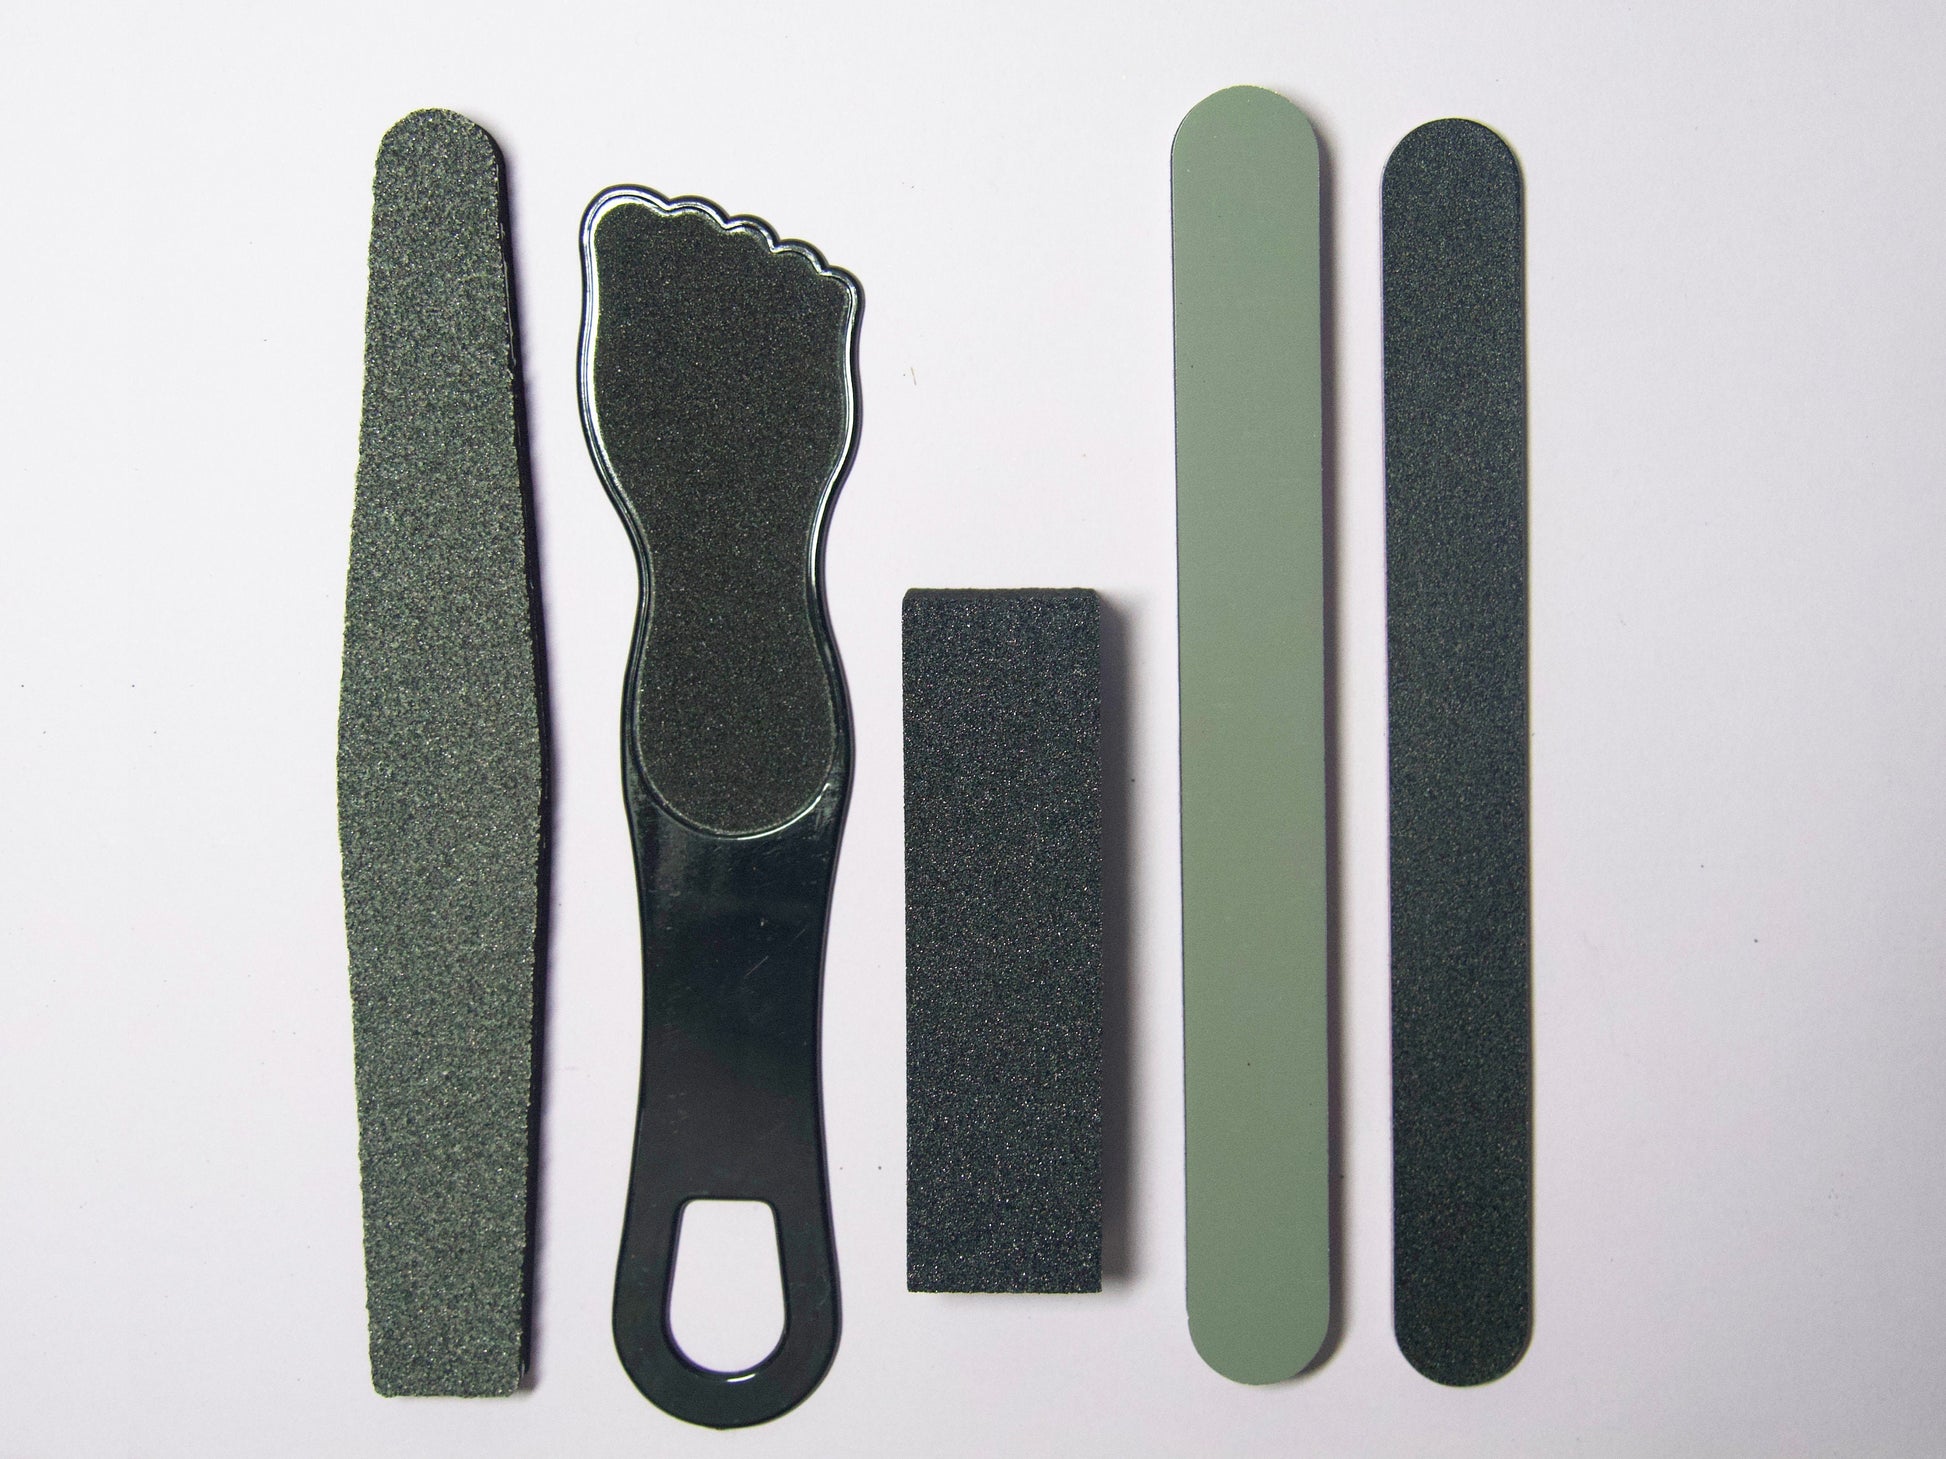 12pcs Pedicure Tools Set/ Foot Care Kit Feet Rasp Dead Skin Remover Kit/ Manicure File Buffer Kit Foot Callus Remove/ Nail supply Home care